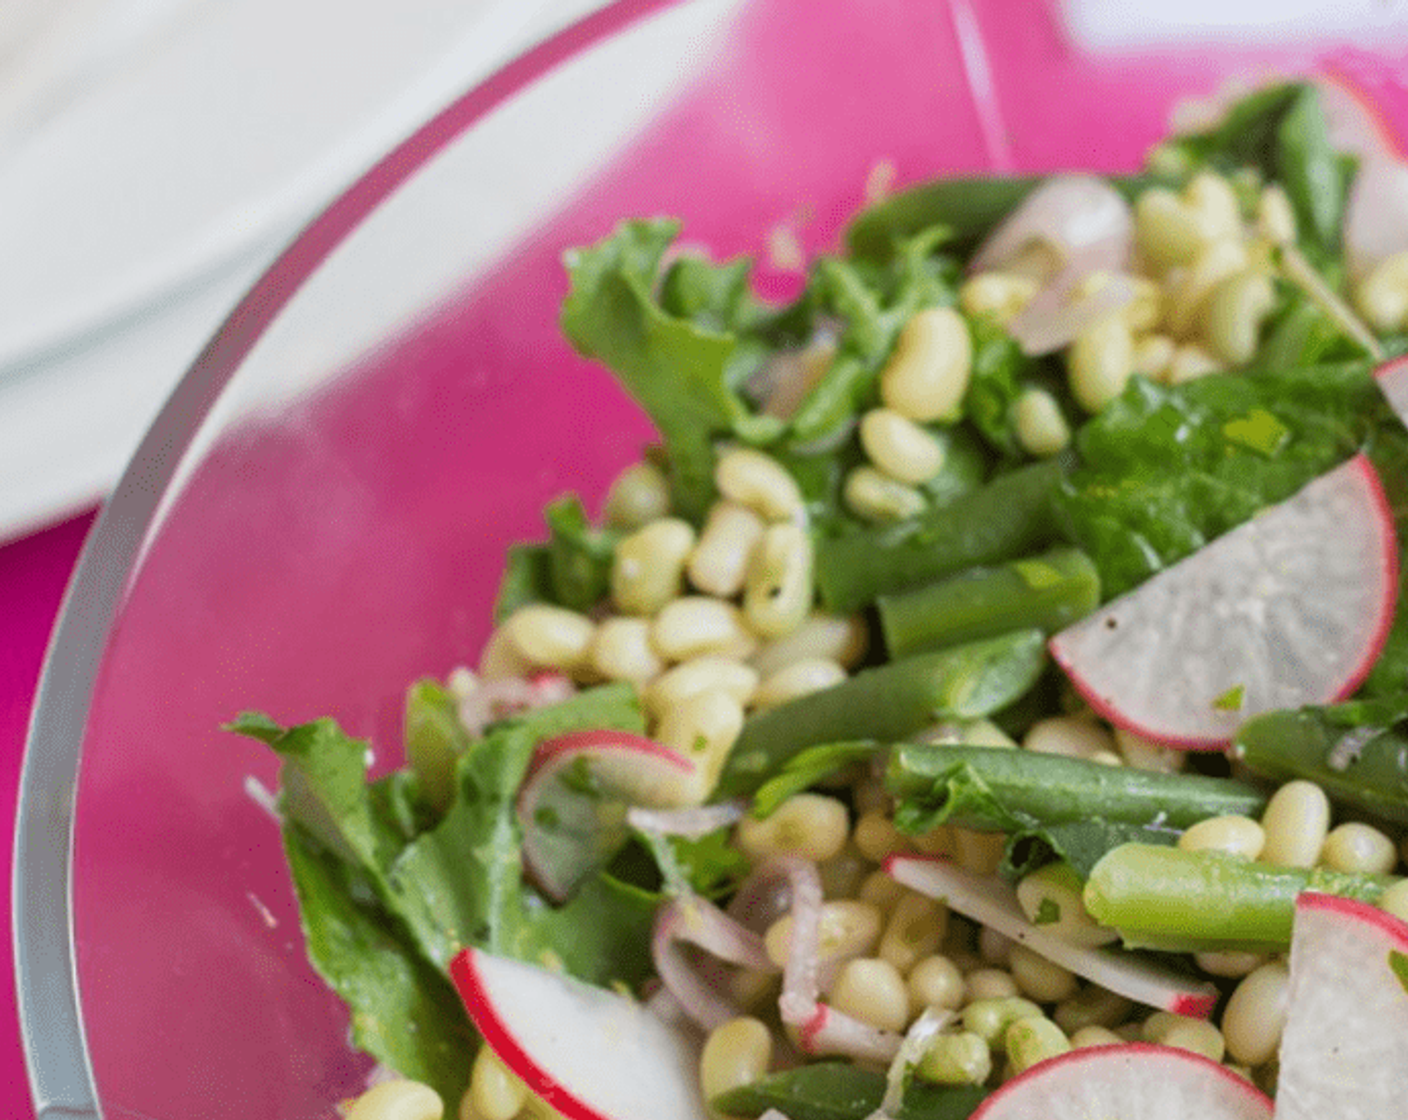 Snap Bean and Field Pea Salad with Boquerones